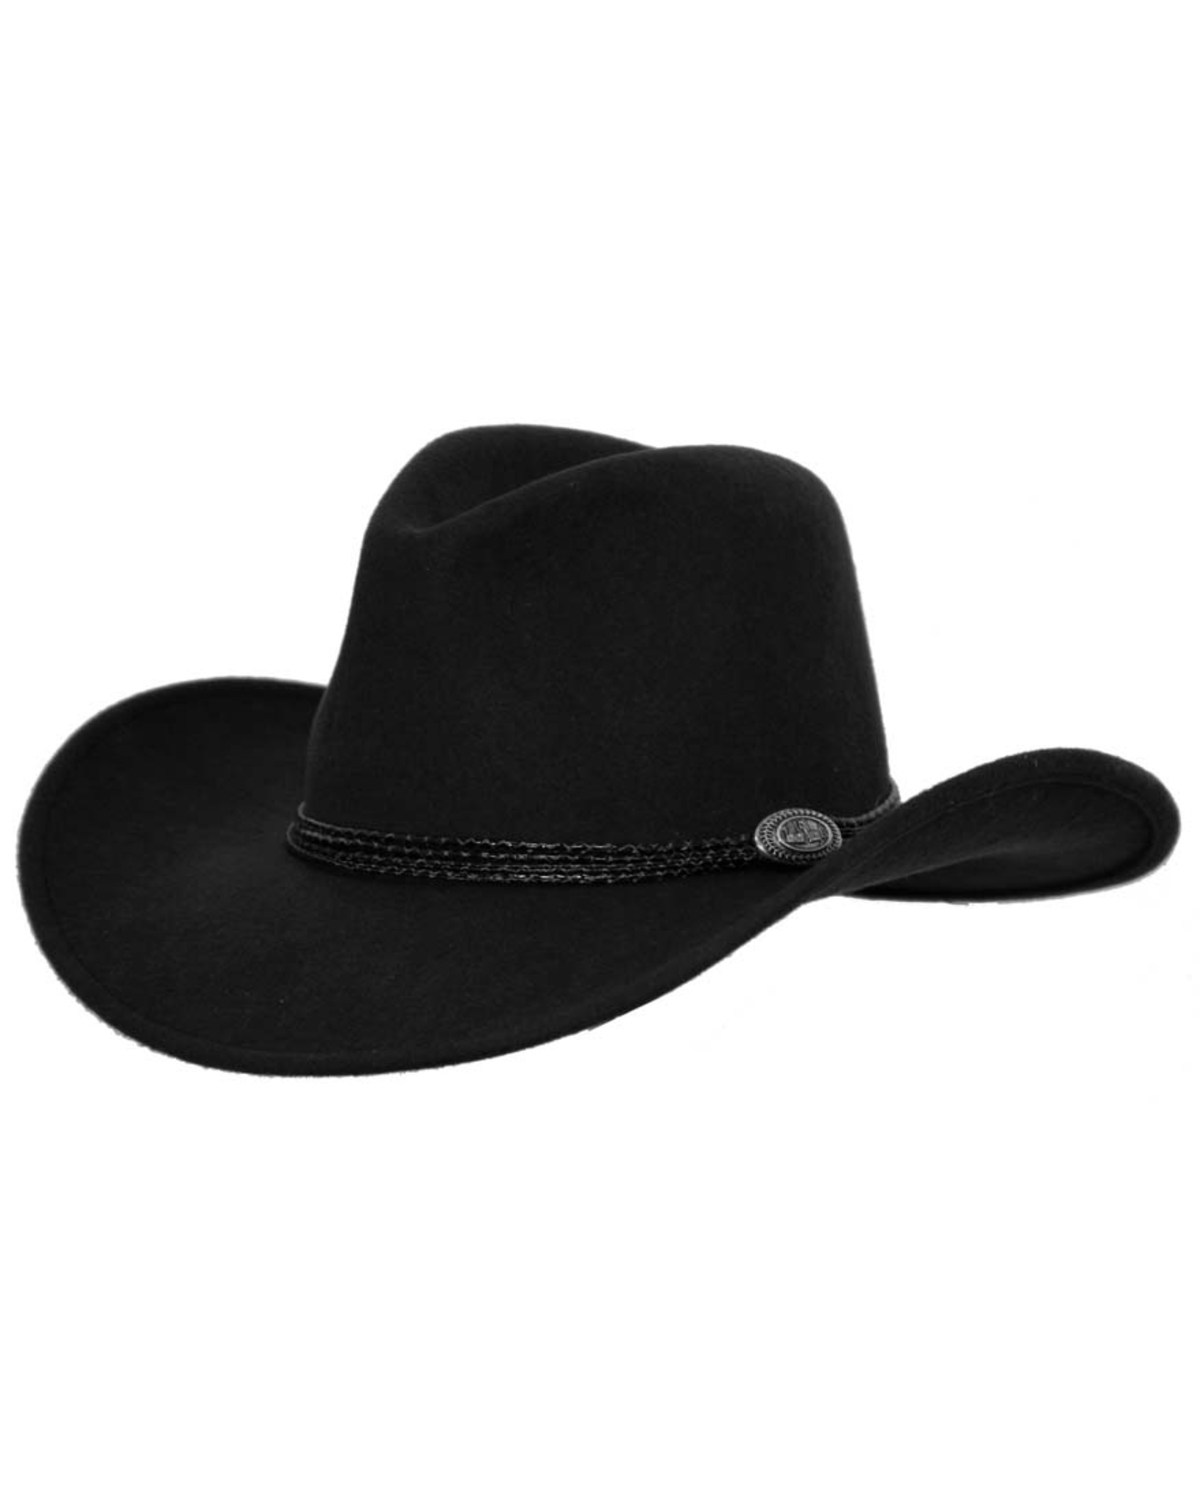 Outback Trading Co. Men's Shy Game Crusher UPF 50 Felt Western Fashion Hat